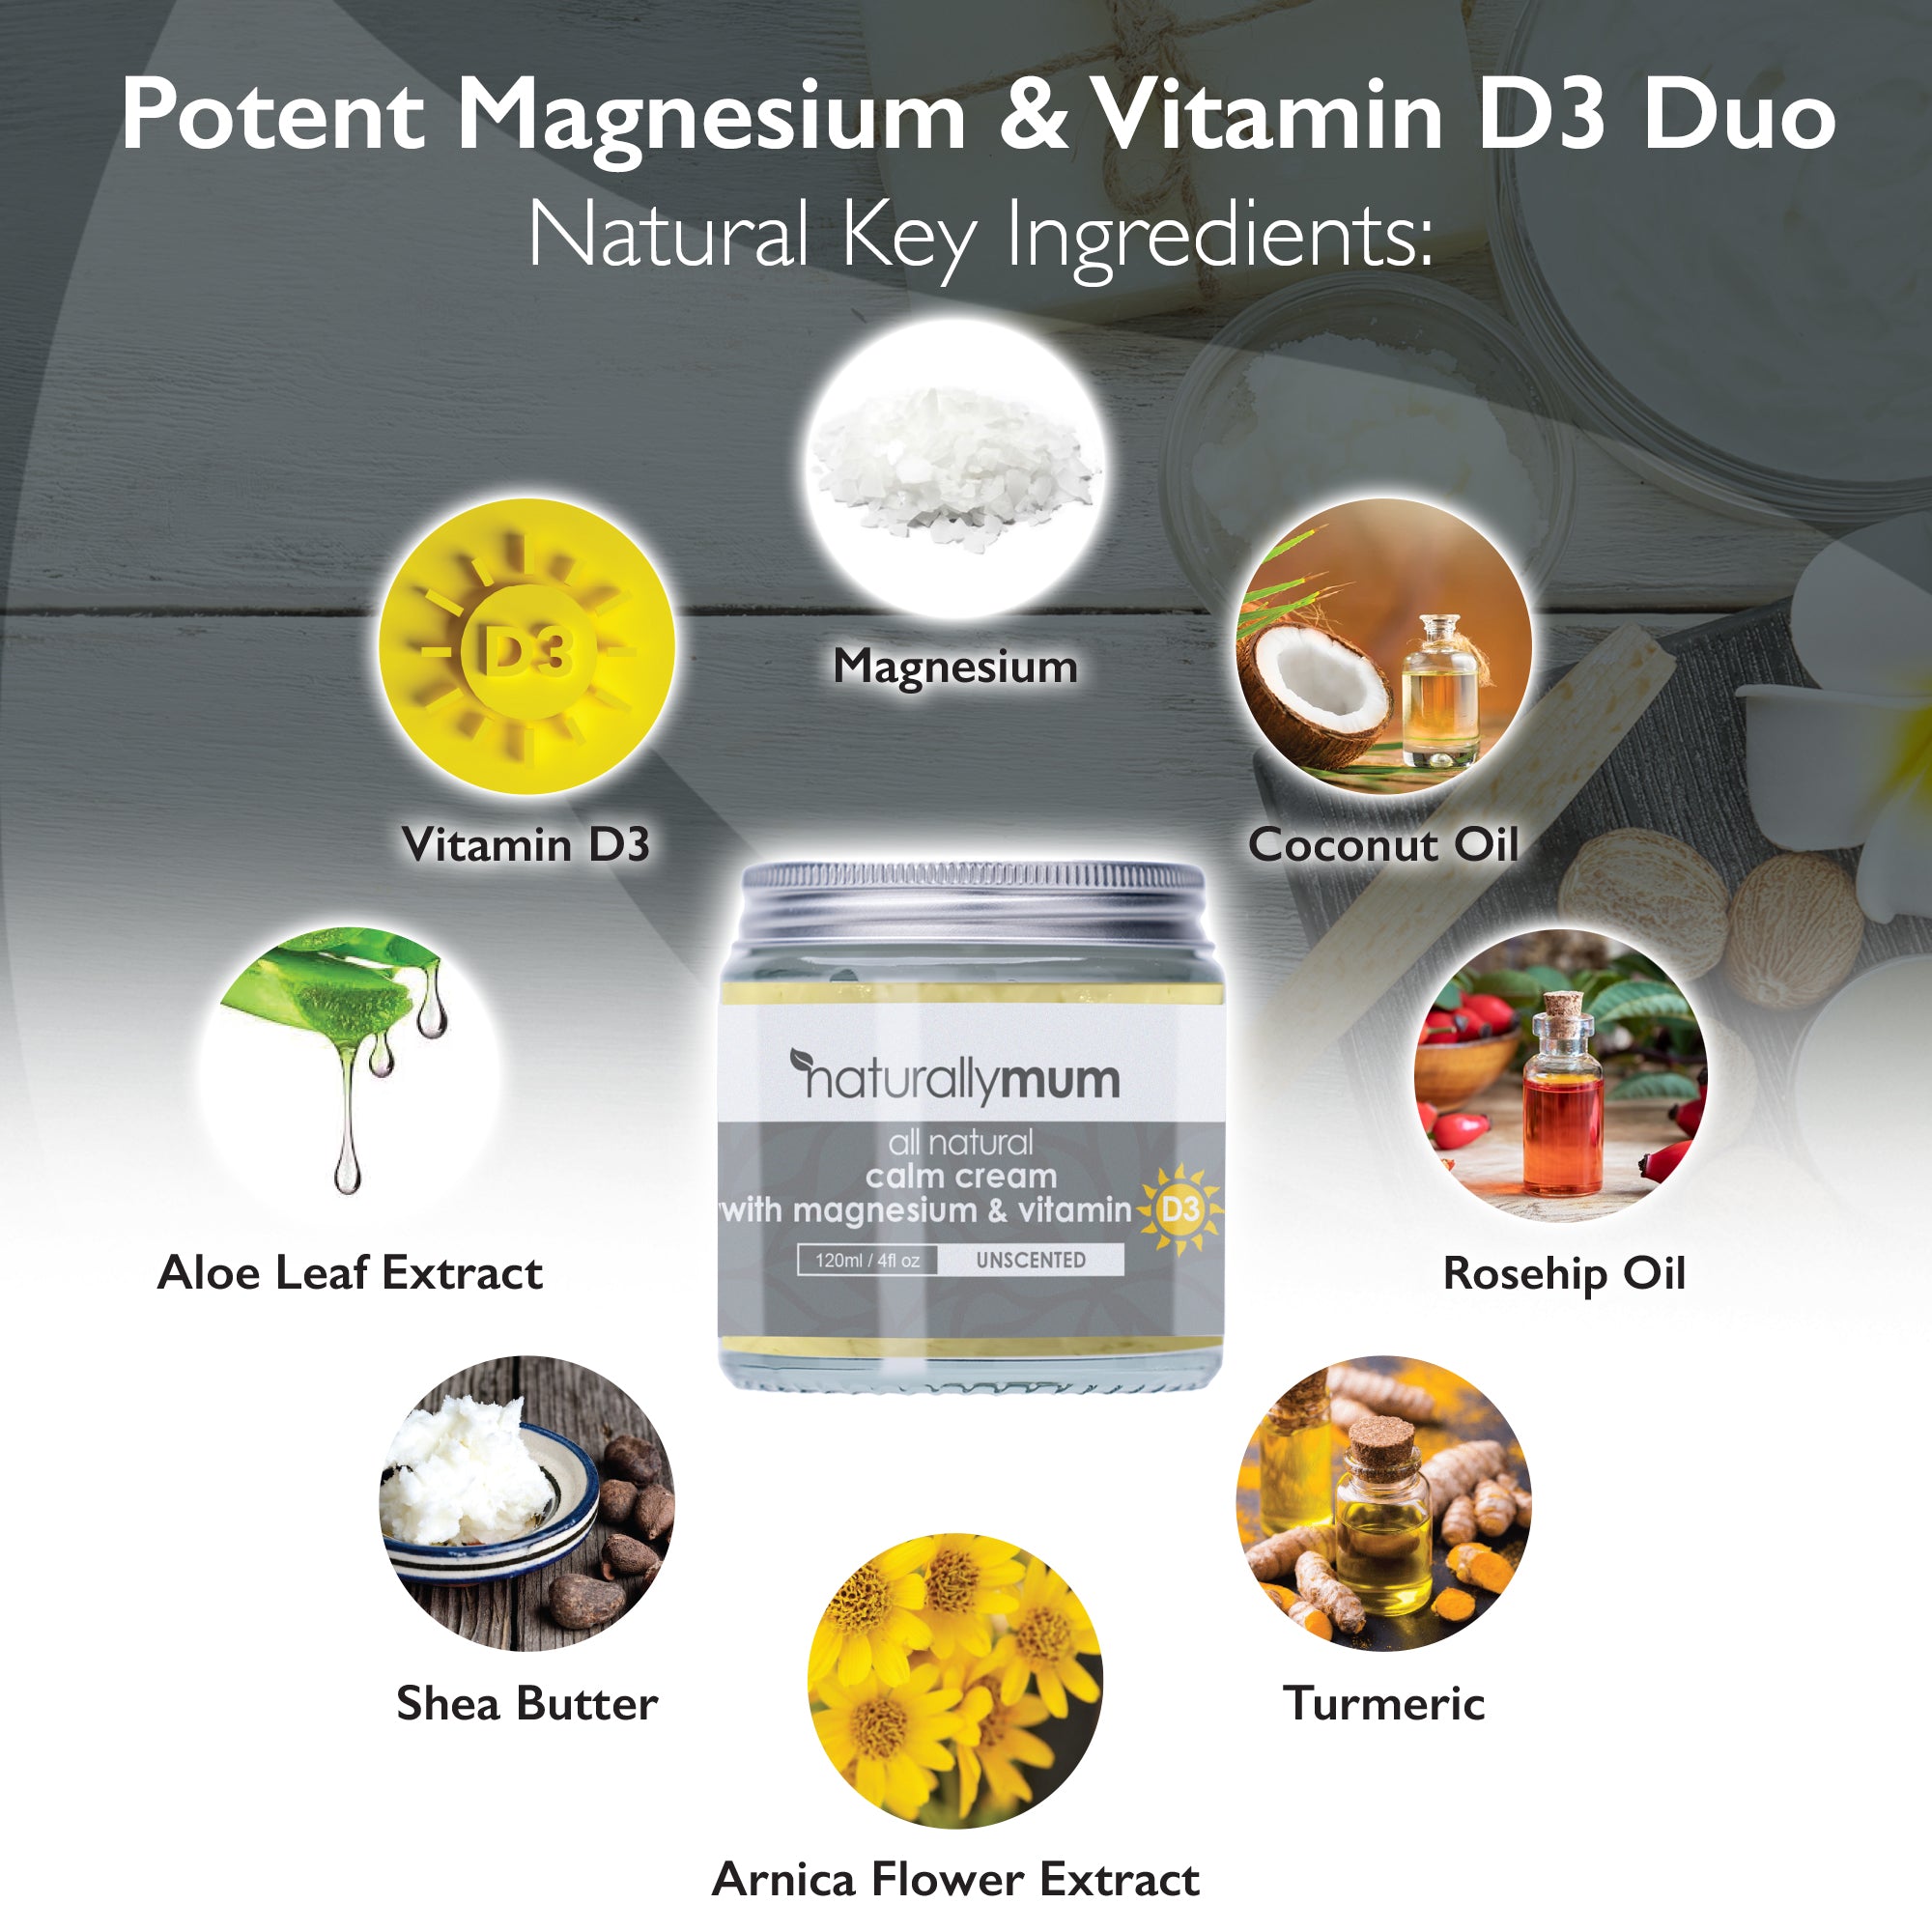 NaturallyMum Calm Cream with Magnesium and Vitamin D | Unscented | 120ml